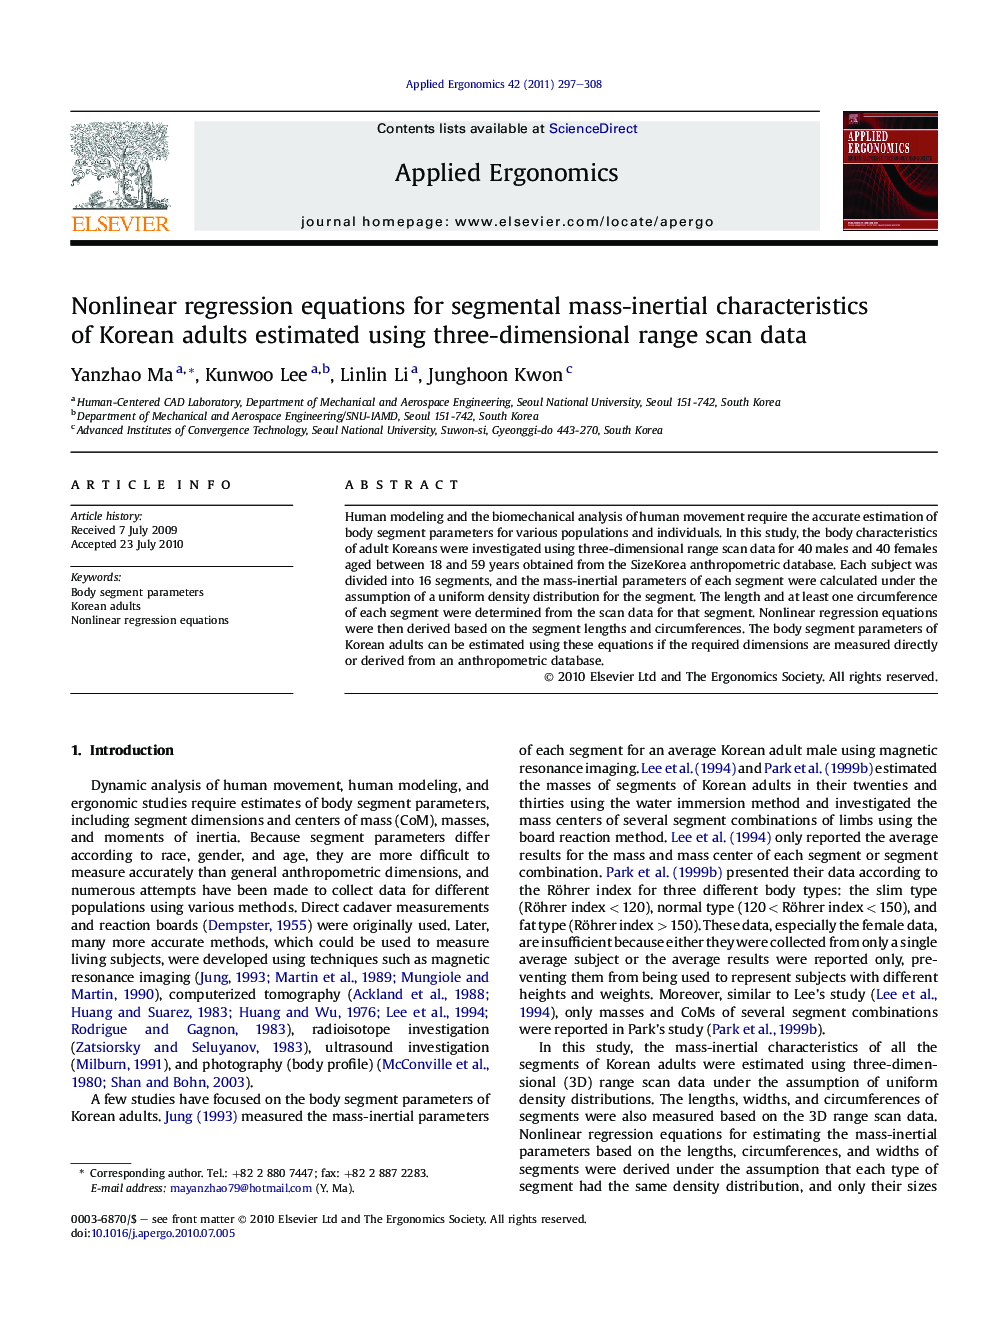 Nonlinear regression equations for segmental mass-inertial characteristics of Korean adults estimated using three-dimensional range scan data